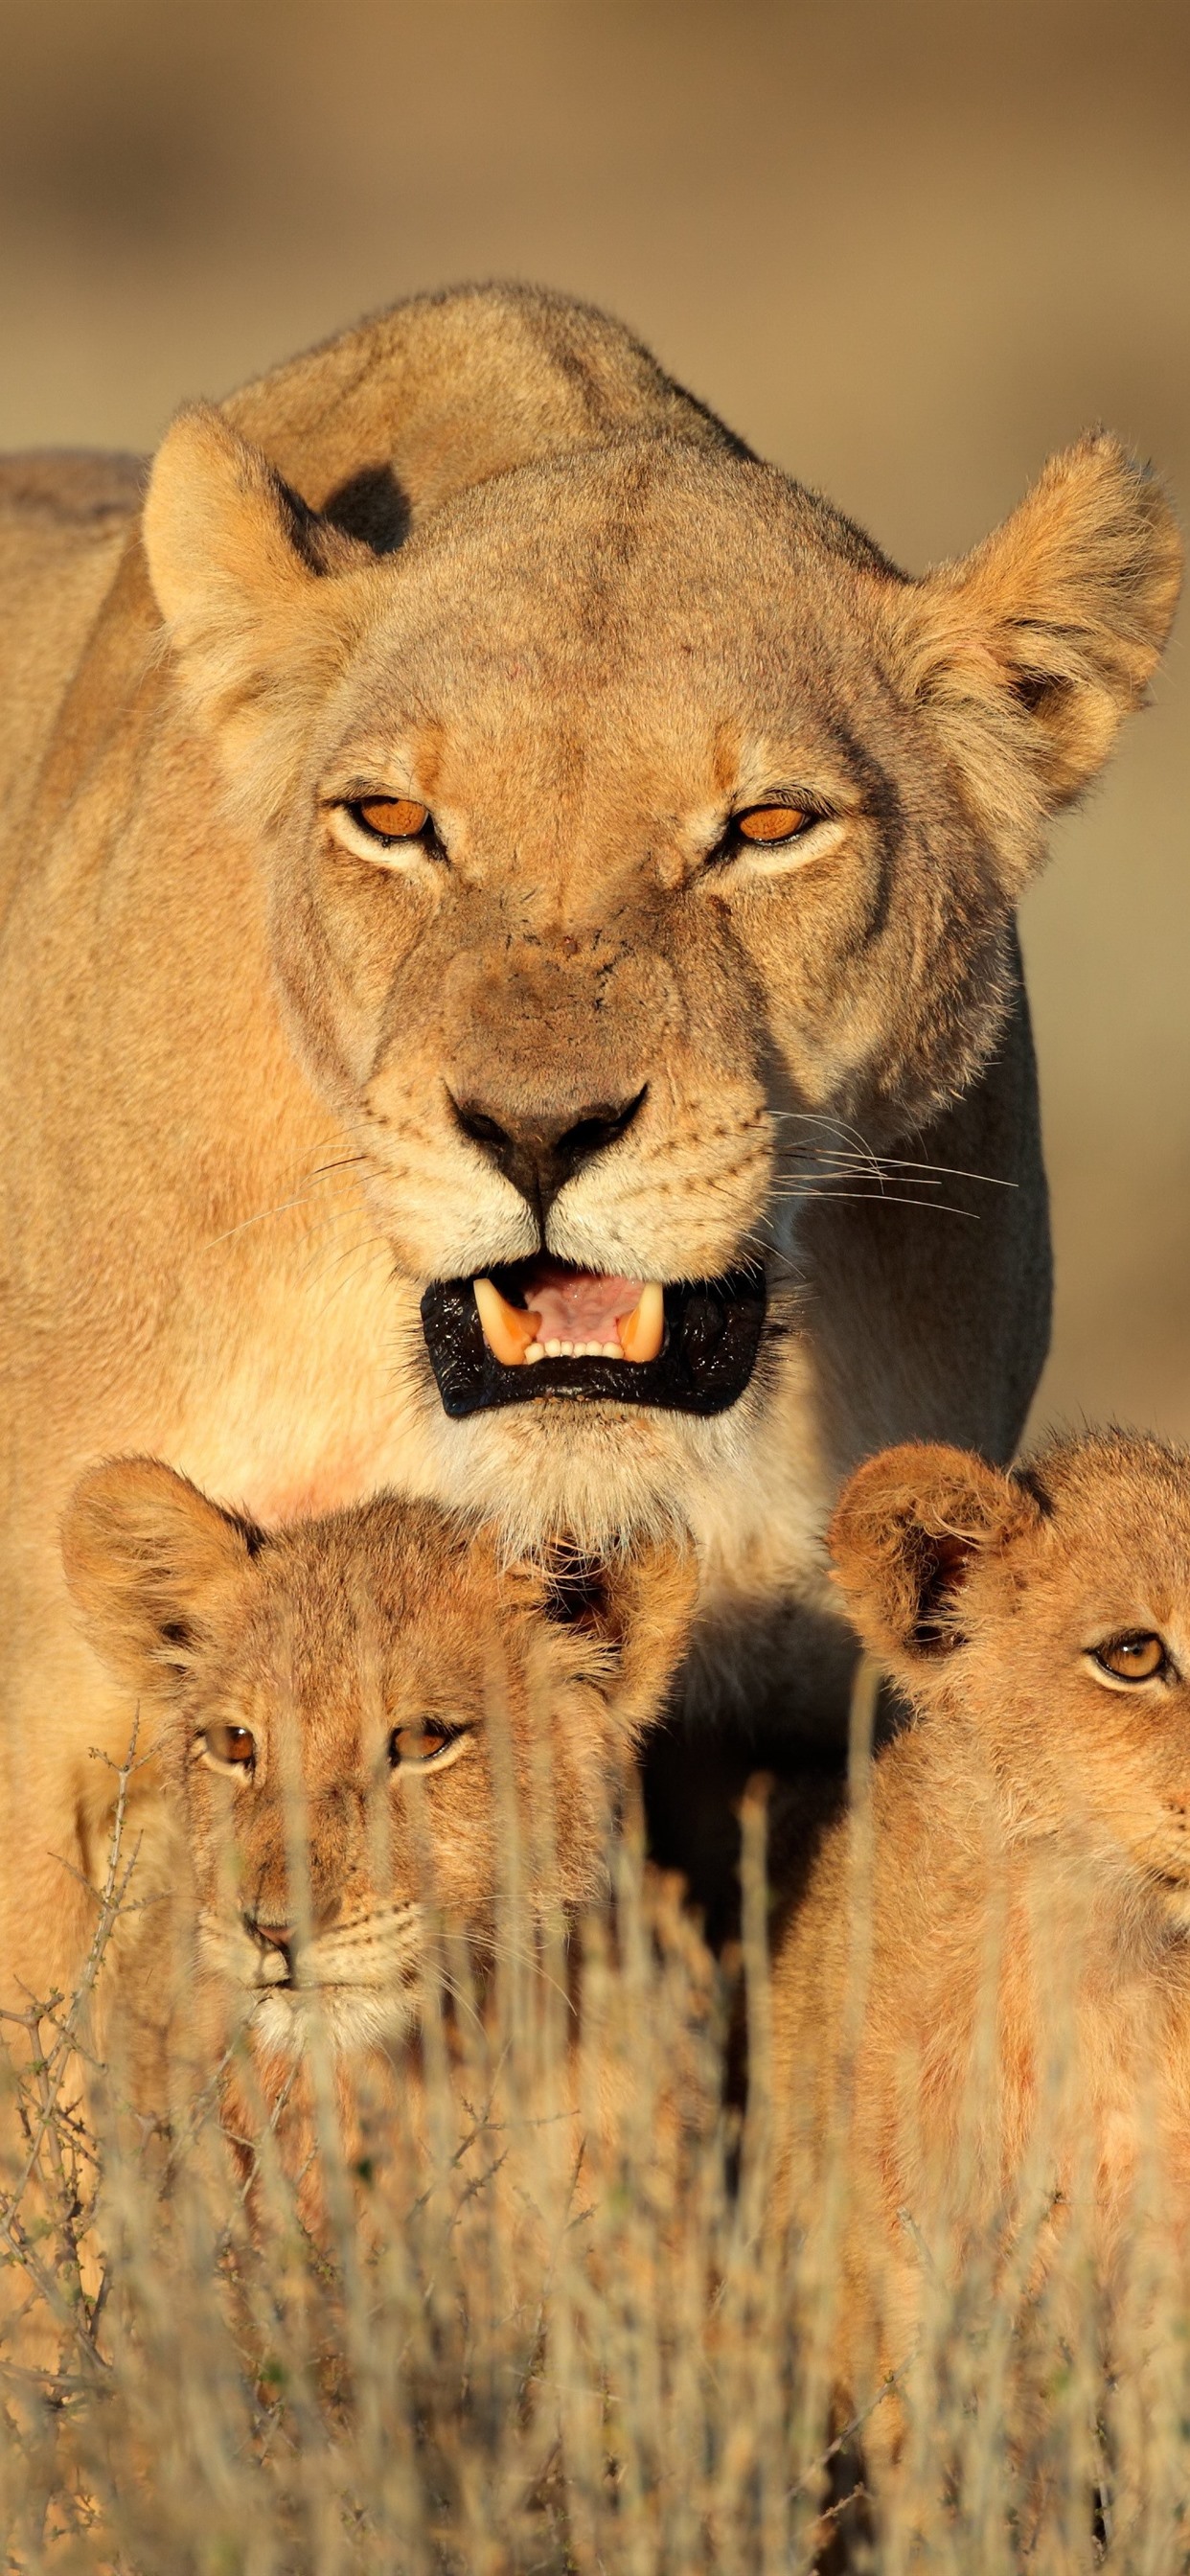 Wallpaper Lion family, cubs, bushes 3840x2160 UHD 4K Picture, Image